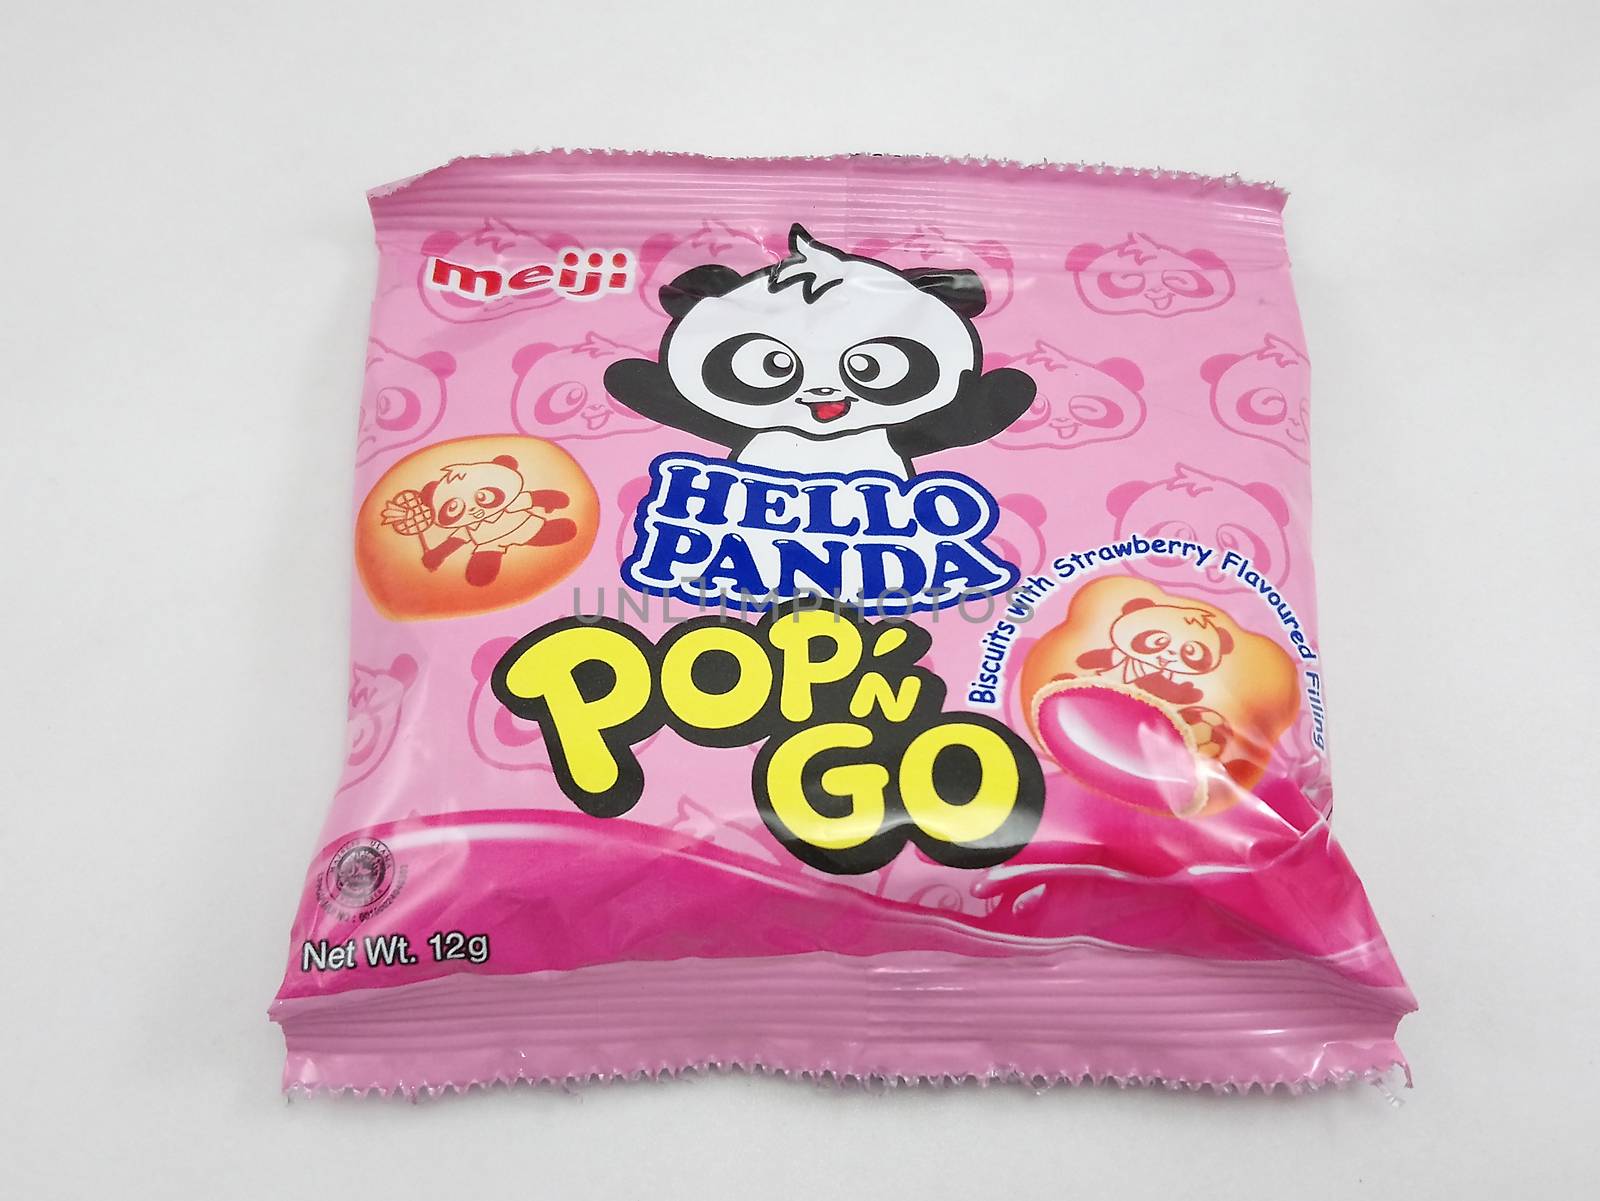 Meiji hello panda pop n go strawberry in Manila, Philippines by imwaltersy